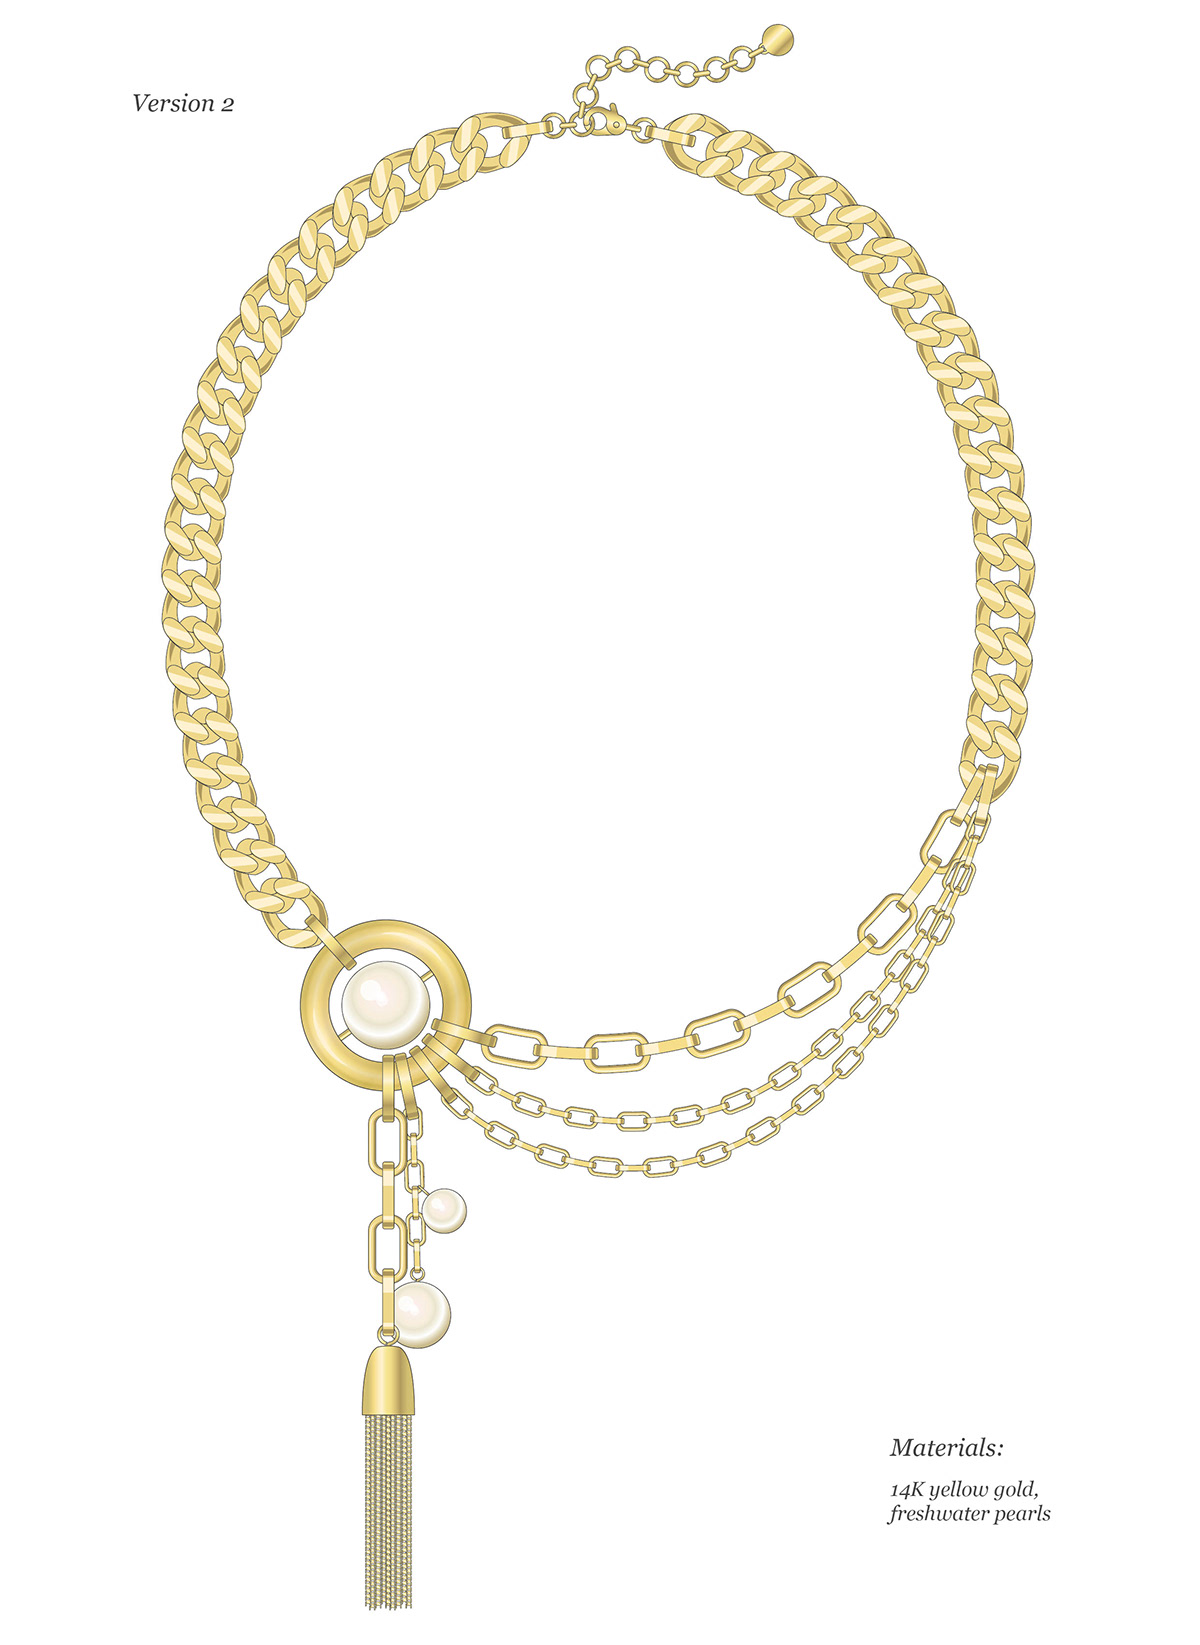 jewelry Jewellery Necklace earrings ring diamonds luxury gold